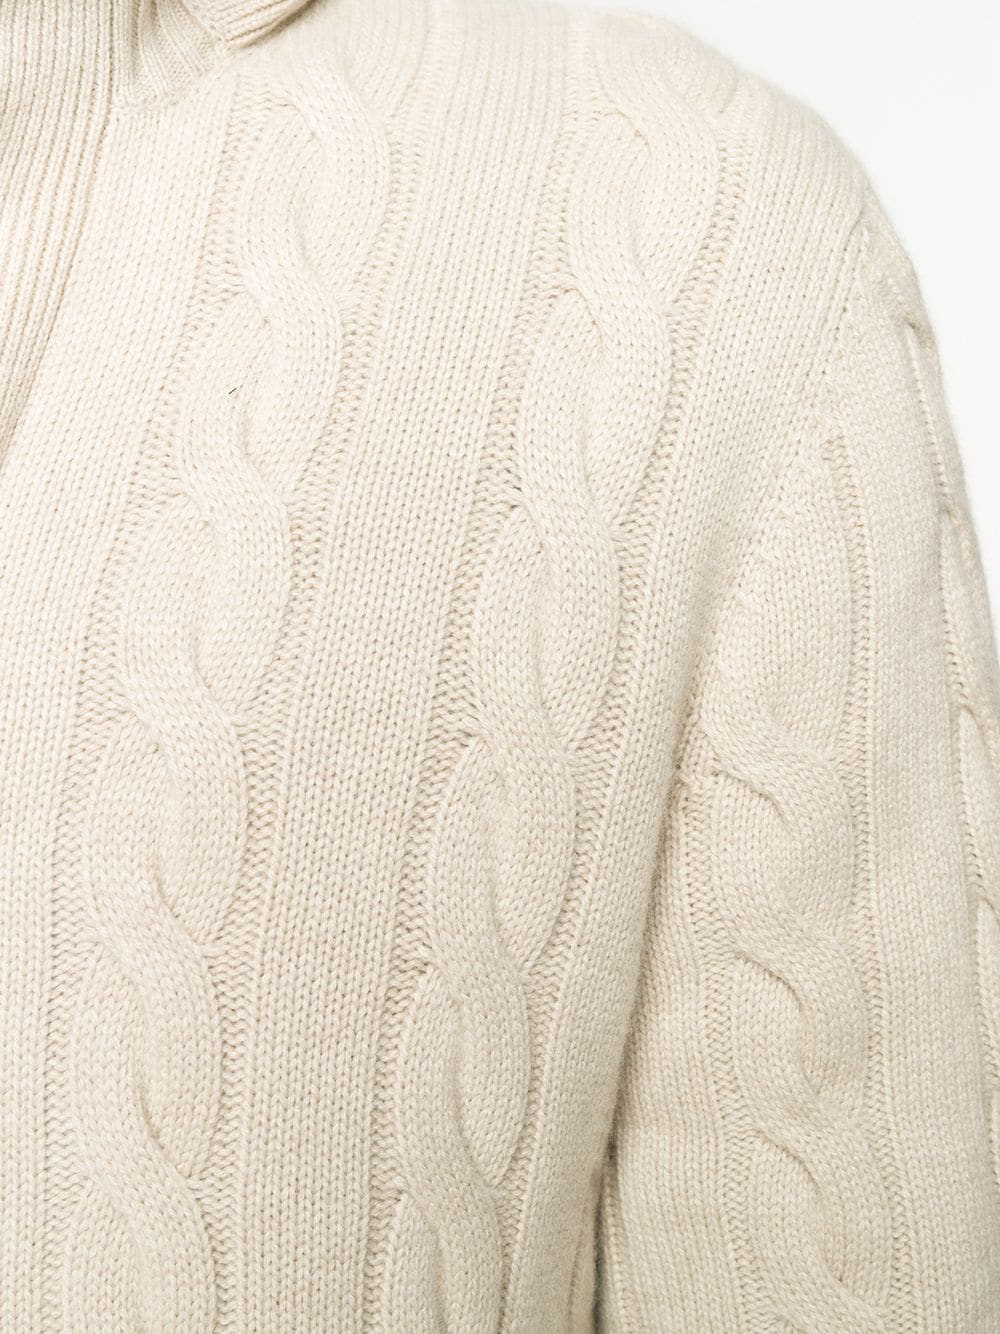 фото Brunello cucinelli свитер фактурной вязки с капюшоном